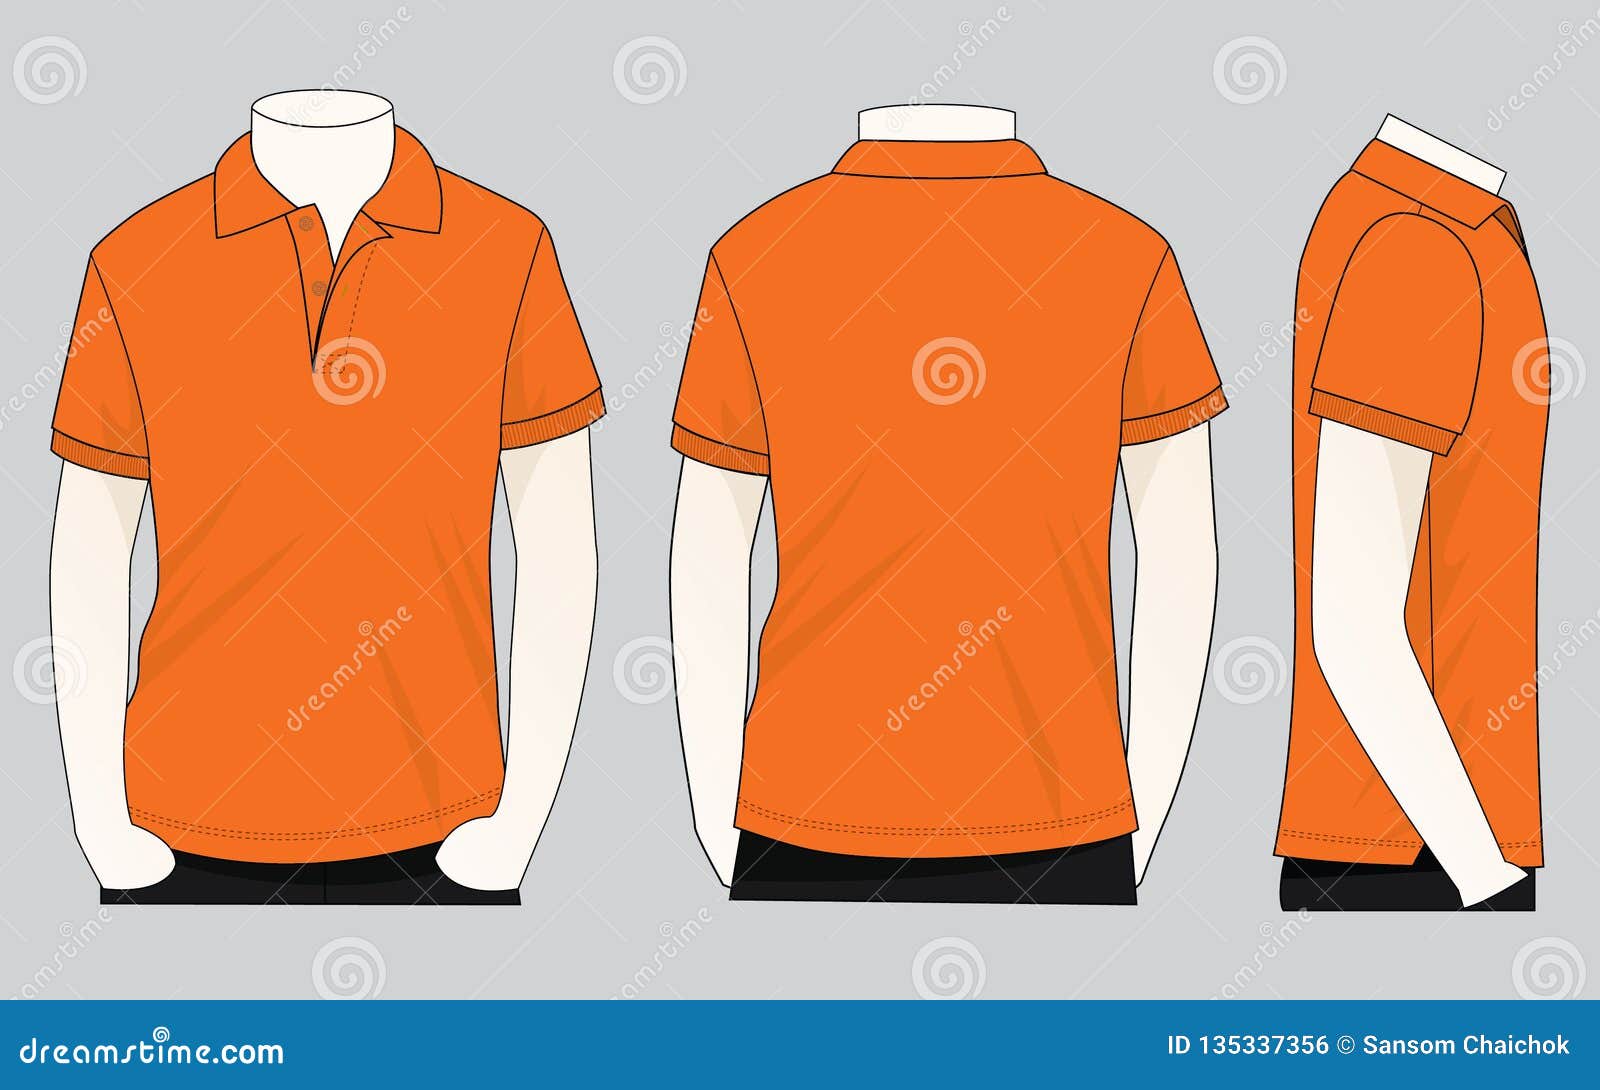 Men S Orange Short Sleeves Polo Shirt Template Vector Stock ...